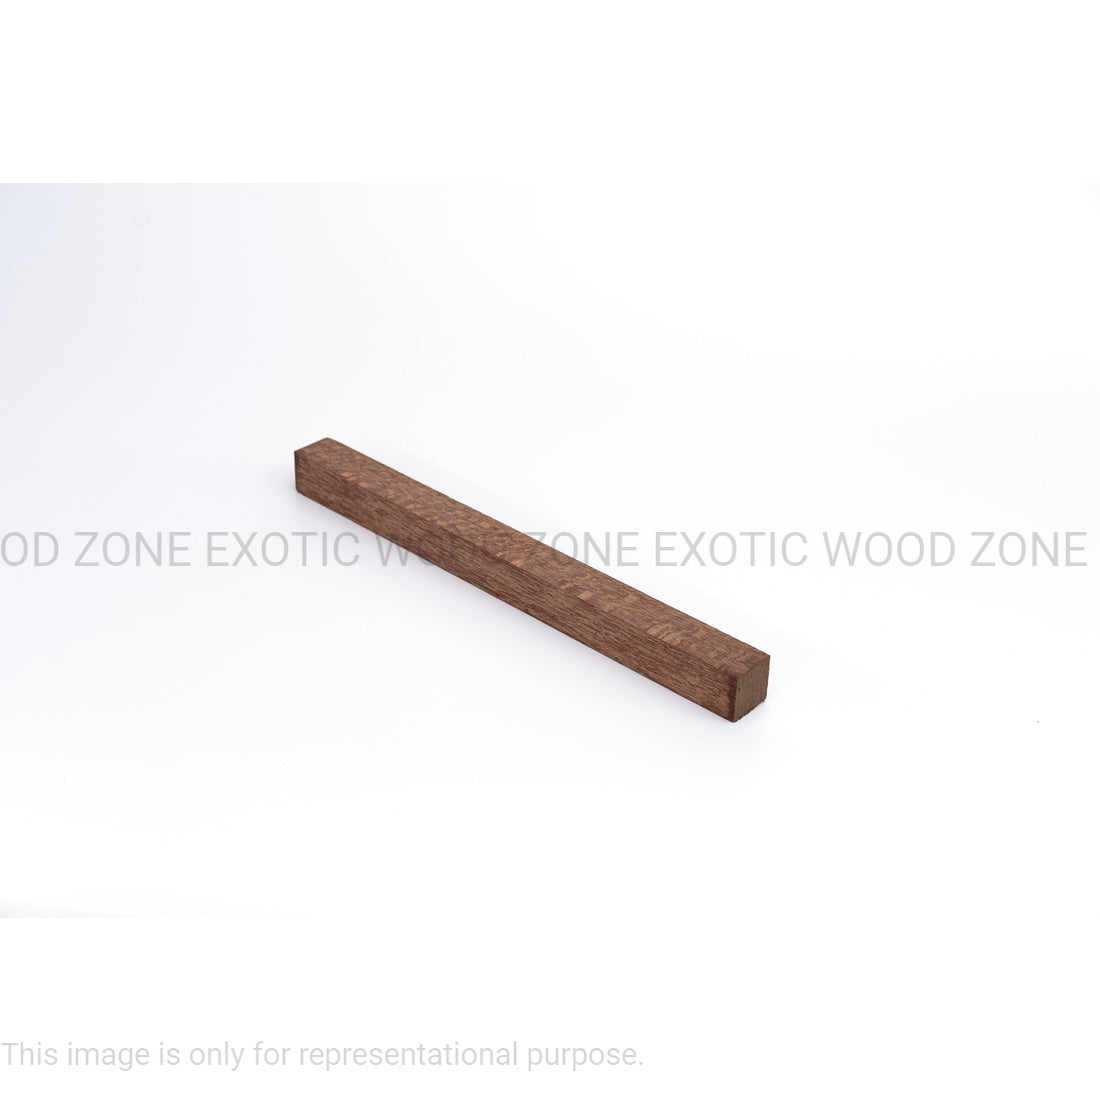 Leopardwood Hobby Wood/ Turning Wood Blanks 1 x 1 x 12 inches